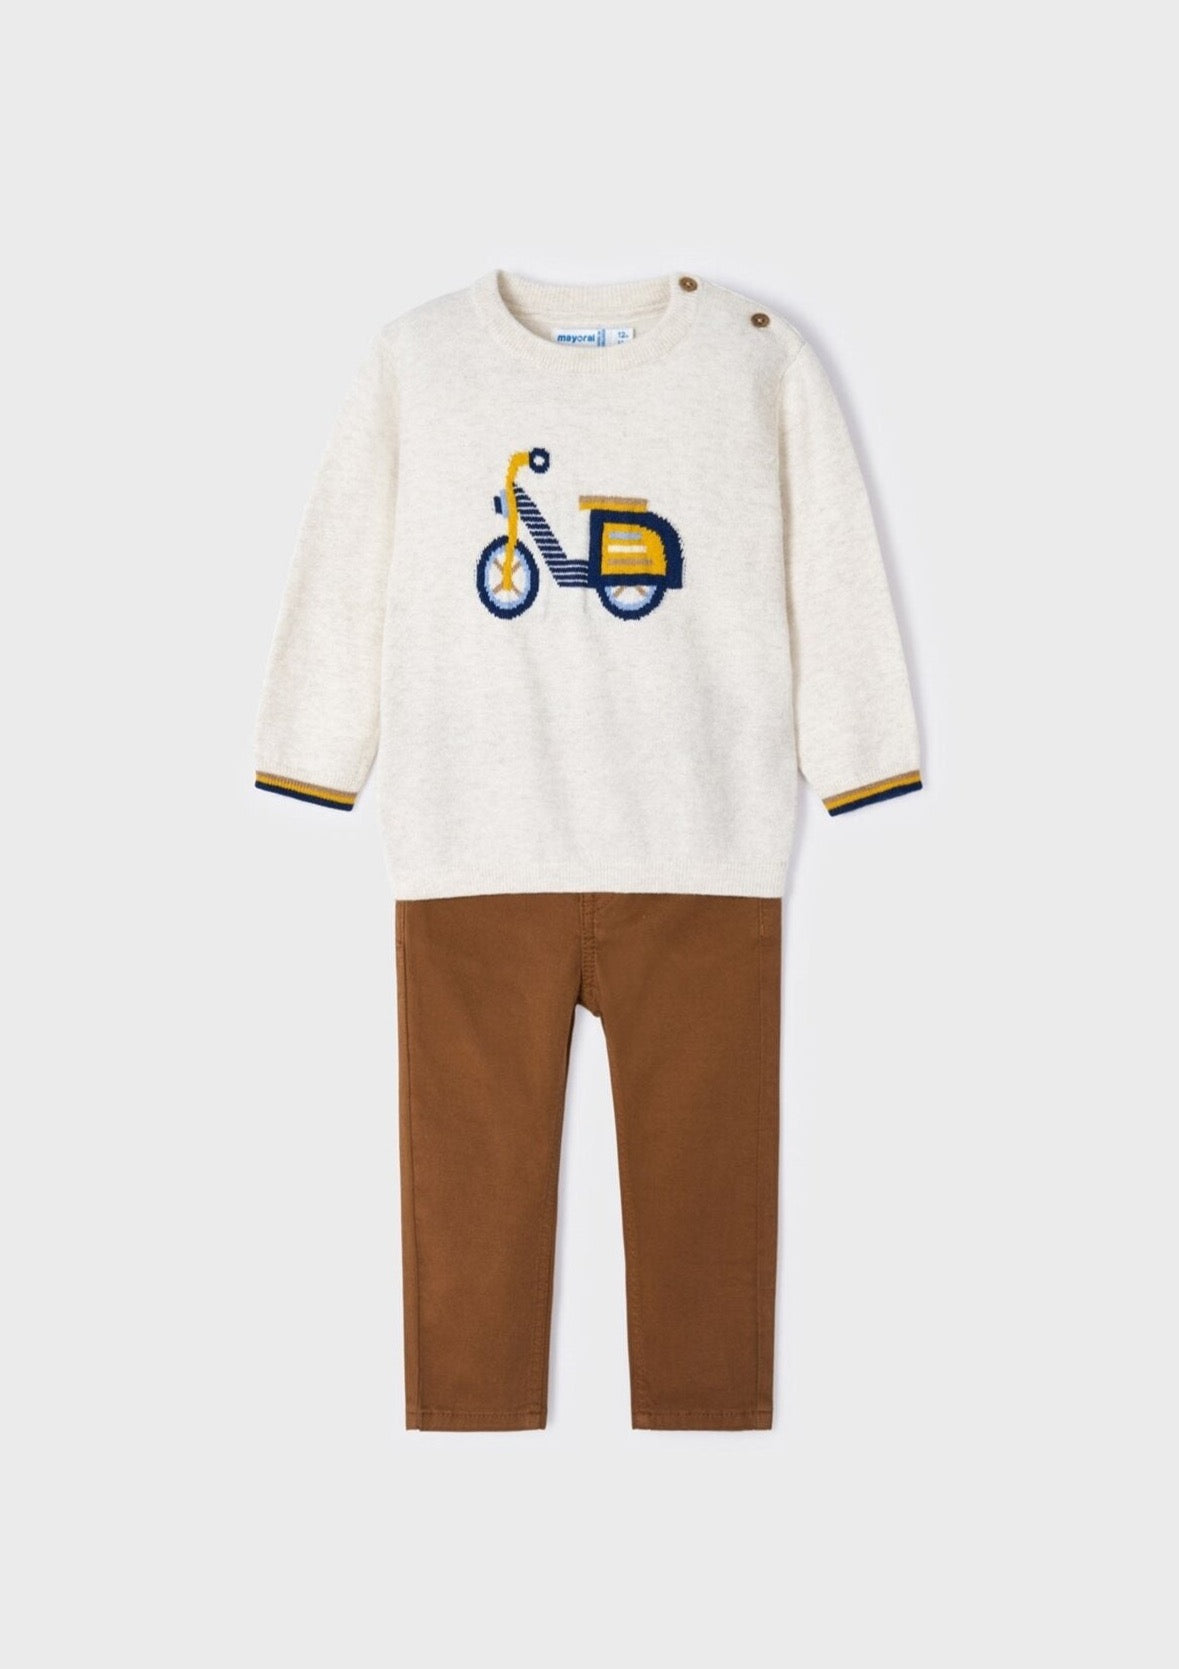 BOYS Long sleeved Sweater & Pant Set | Mayoral - Jenni Kidz